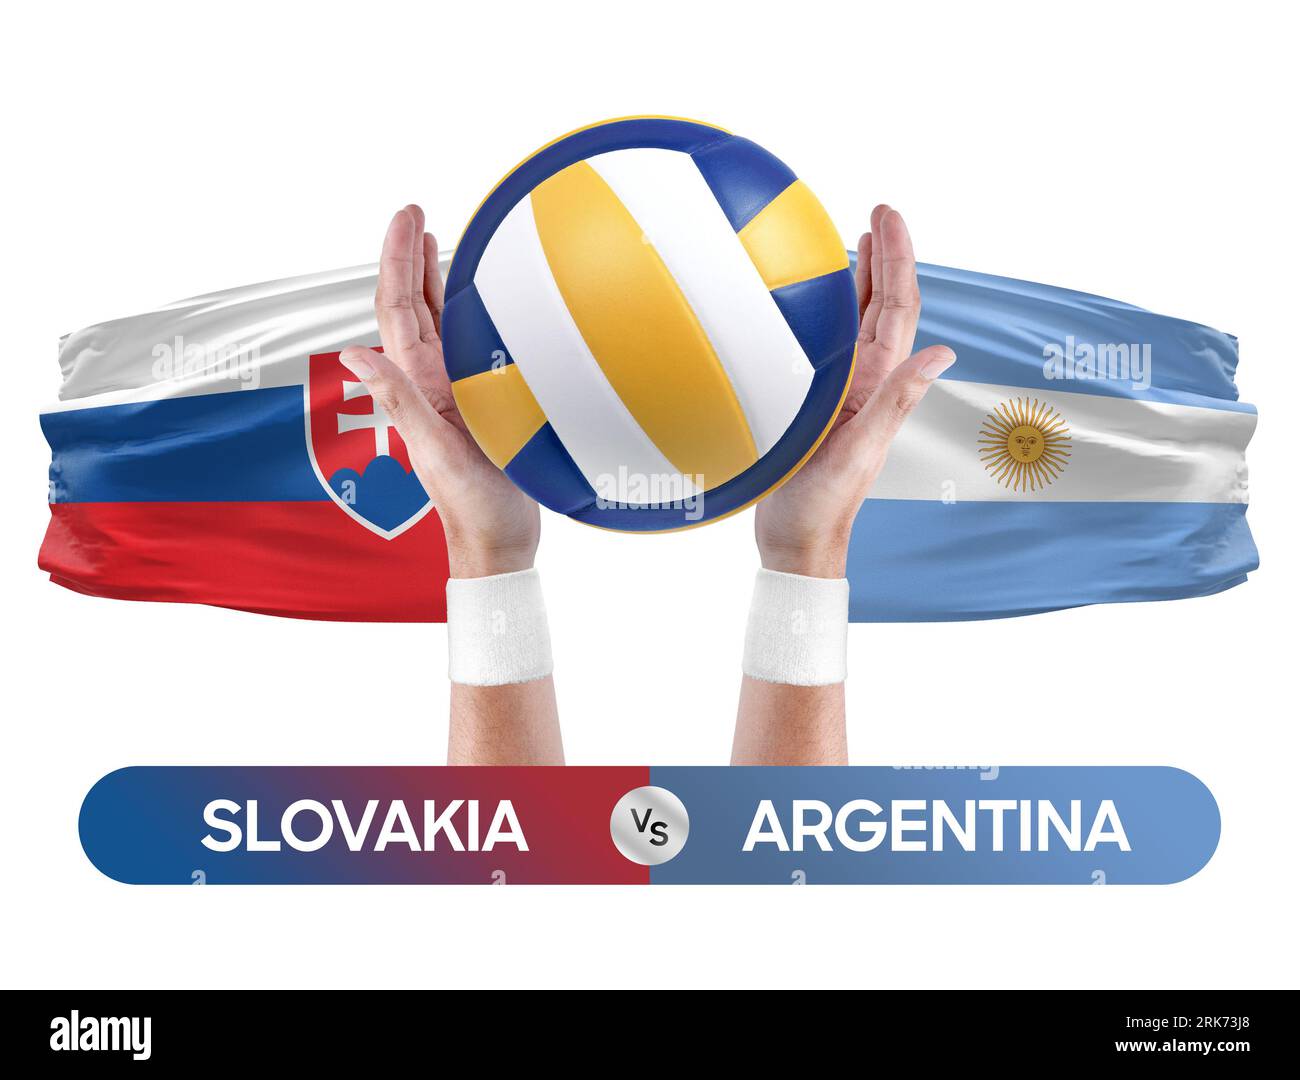 Slowakei gegen Argentinien Nationalmannschaften Volleyball Volleyball-Volleyball-Spiel-Wettkampfkonzept. Stockfoto